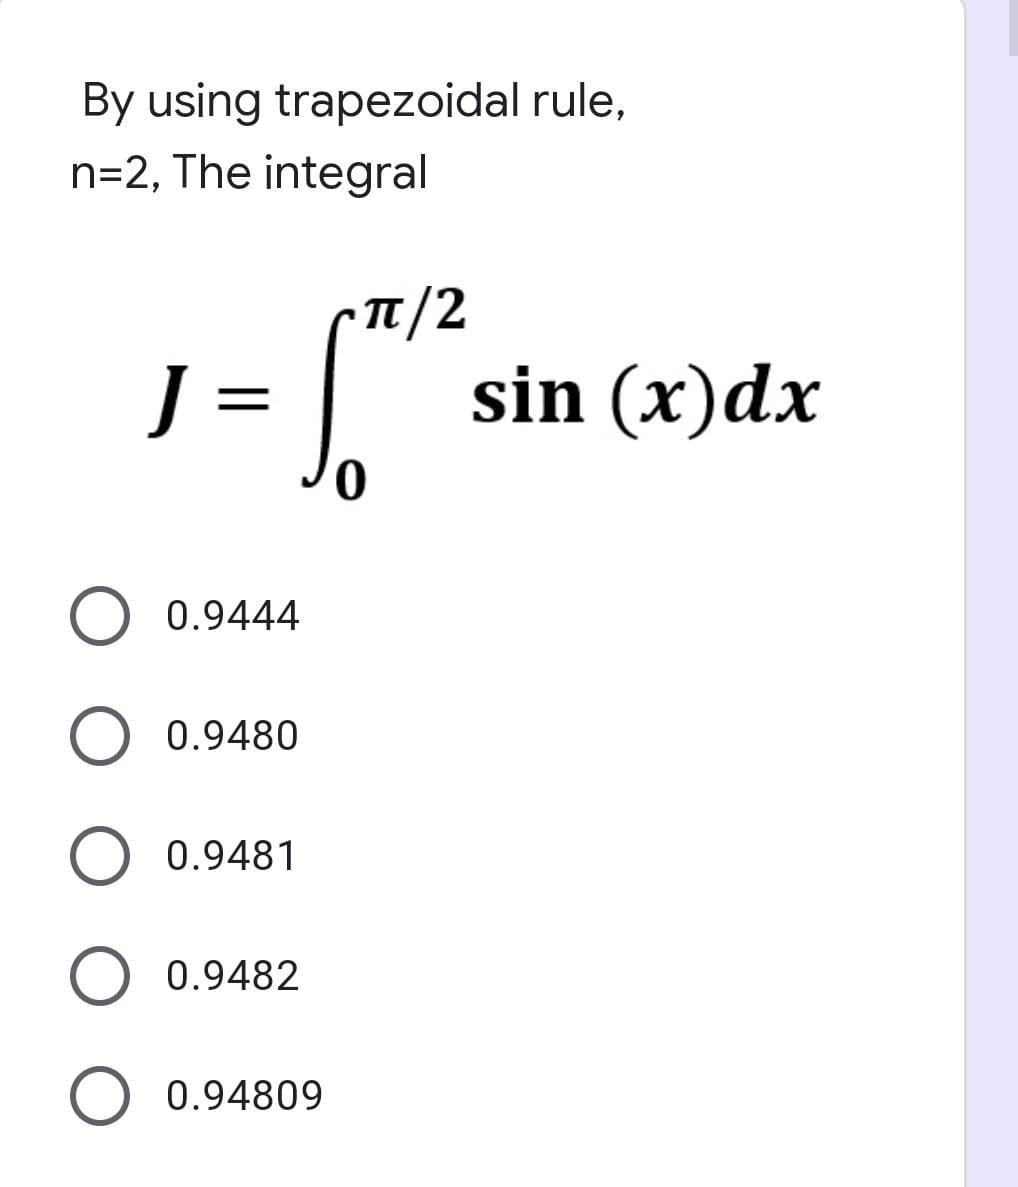 By using trapezoidal rule,
n=2, The integral
J -
O 0.9444
O 0.9480
O 0.9481
0.9482
O 0.94809
π/2
sin (x) dx